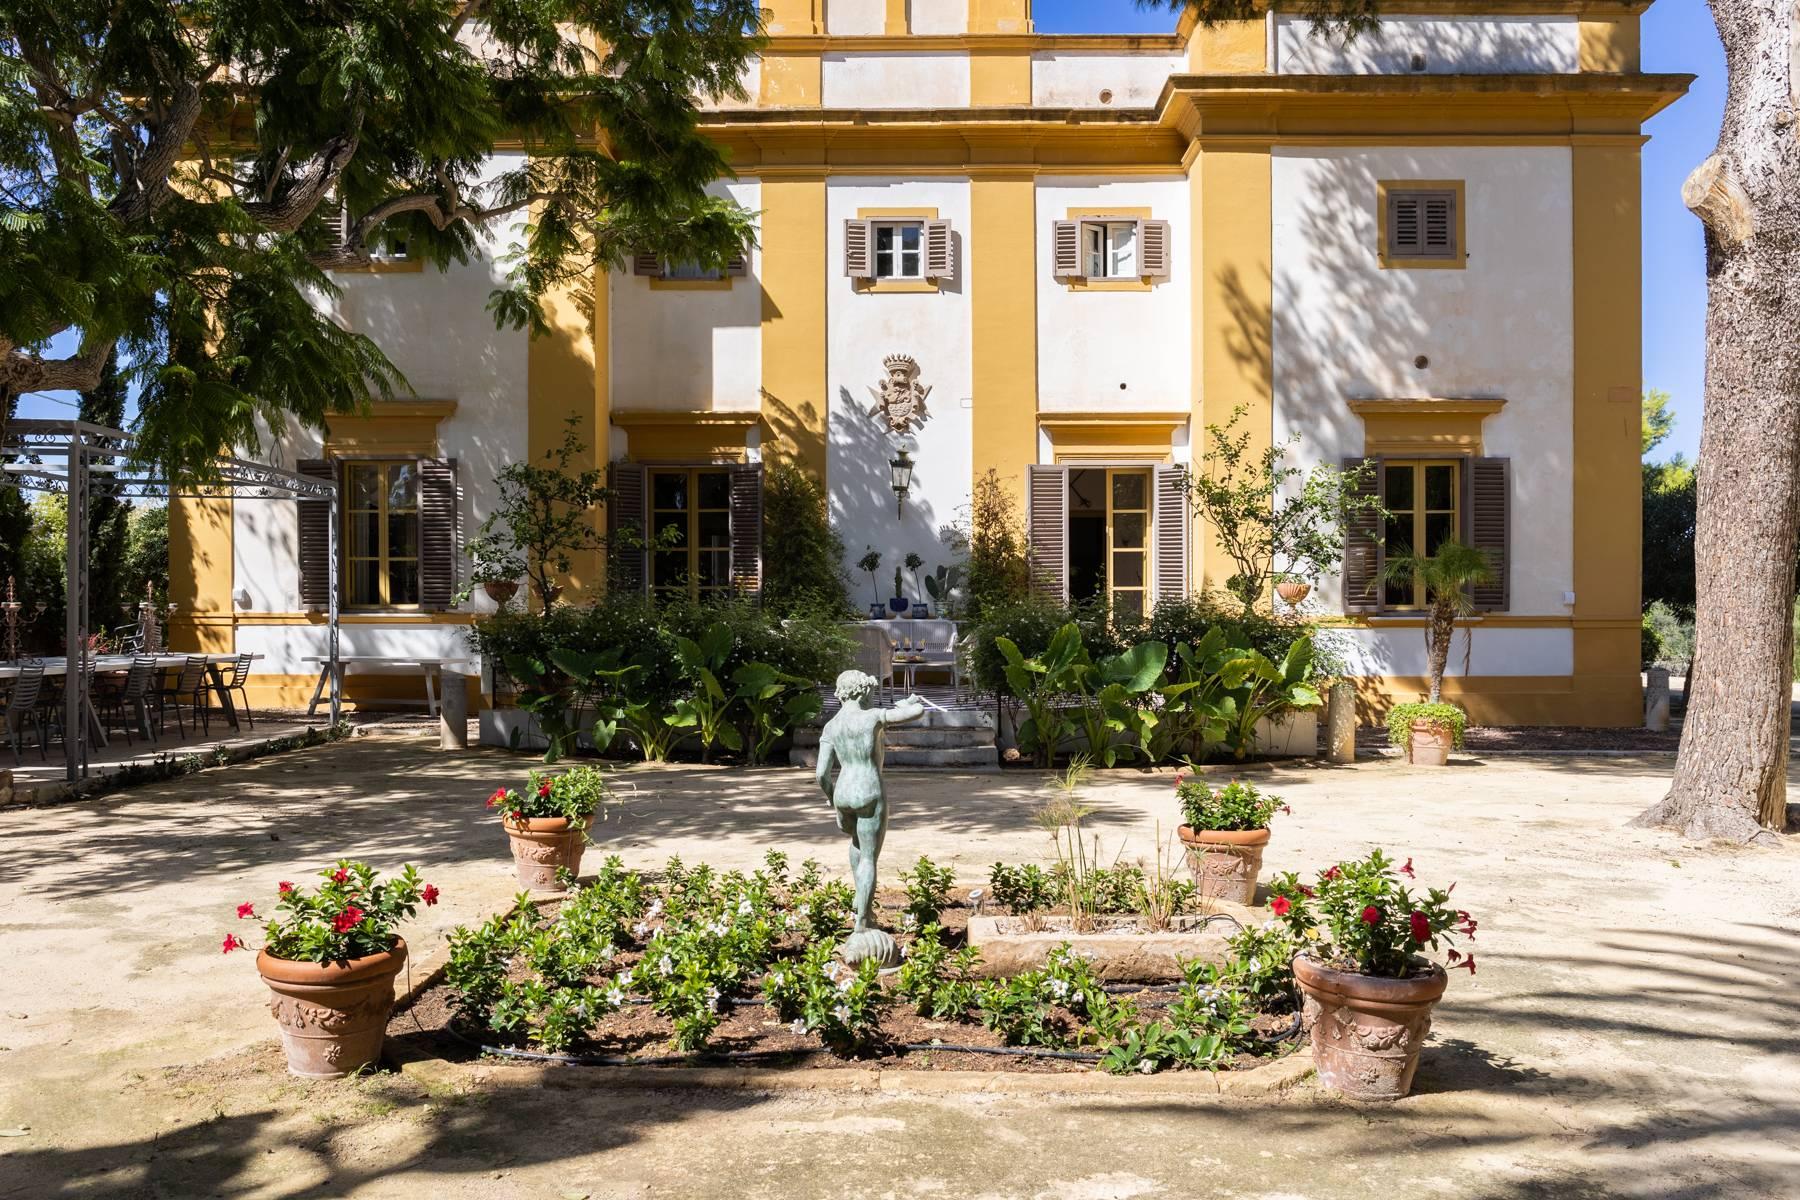 Magnifique villa historique à Marsala - 3